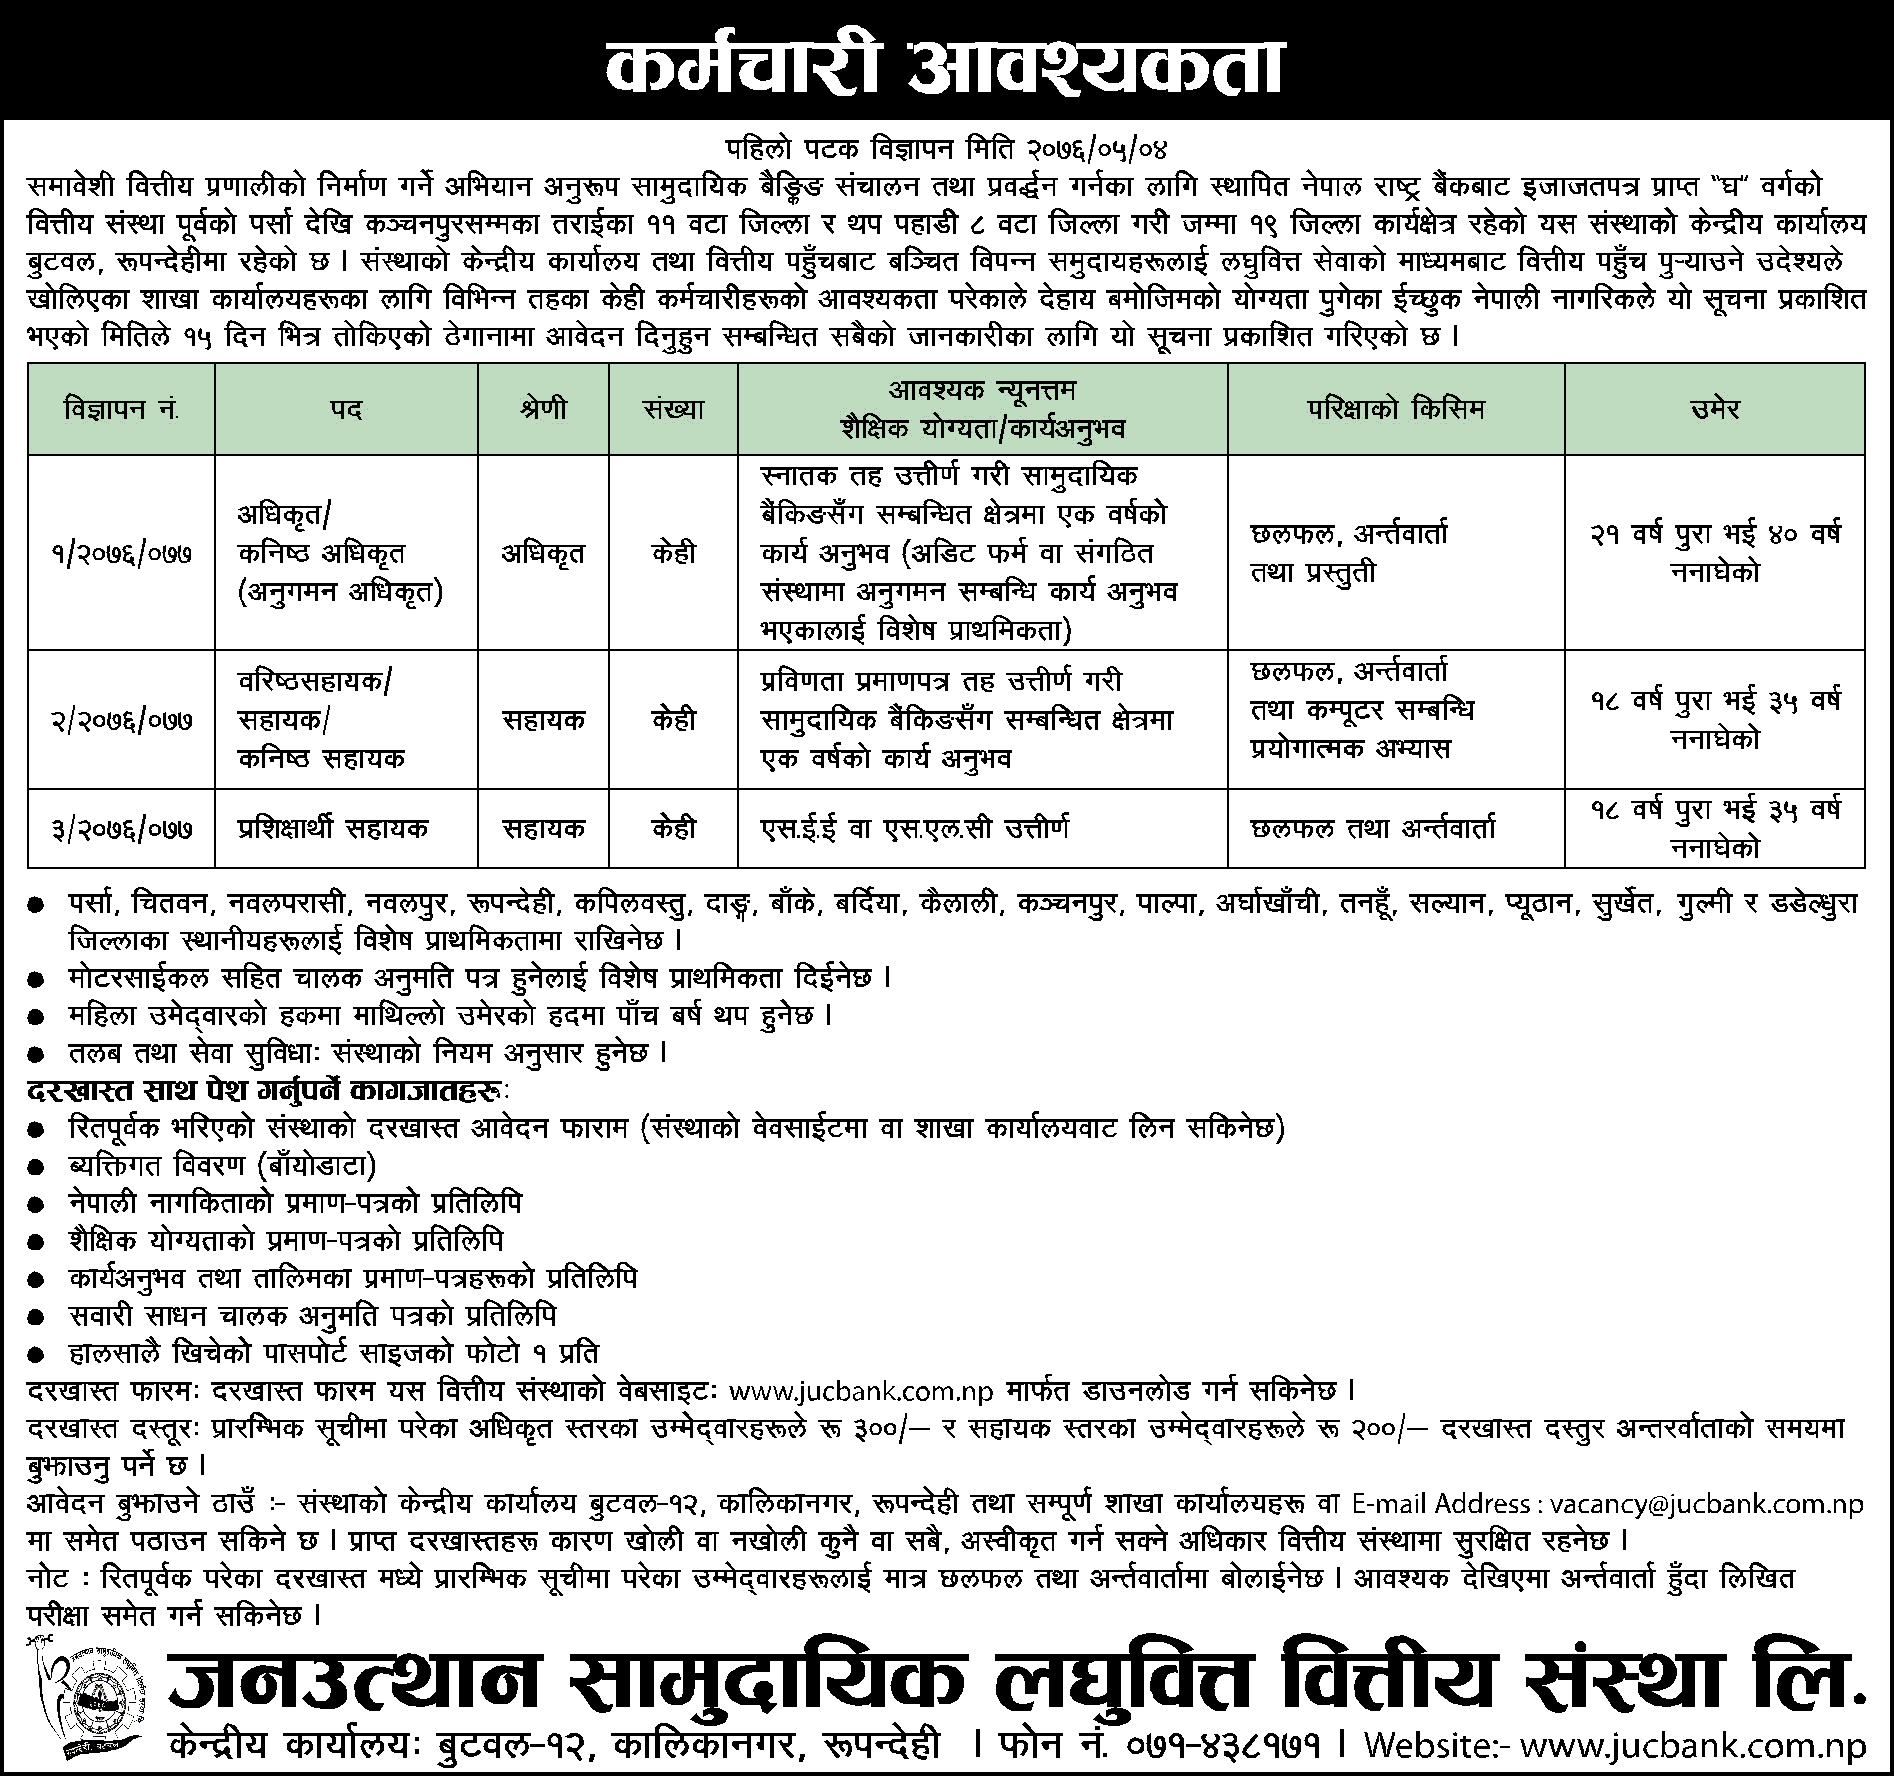 Janautthan Samudayik Laghubitta Bittiya Sanstha Job Vacancy